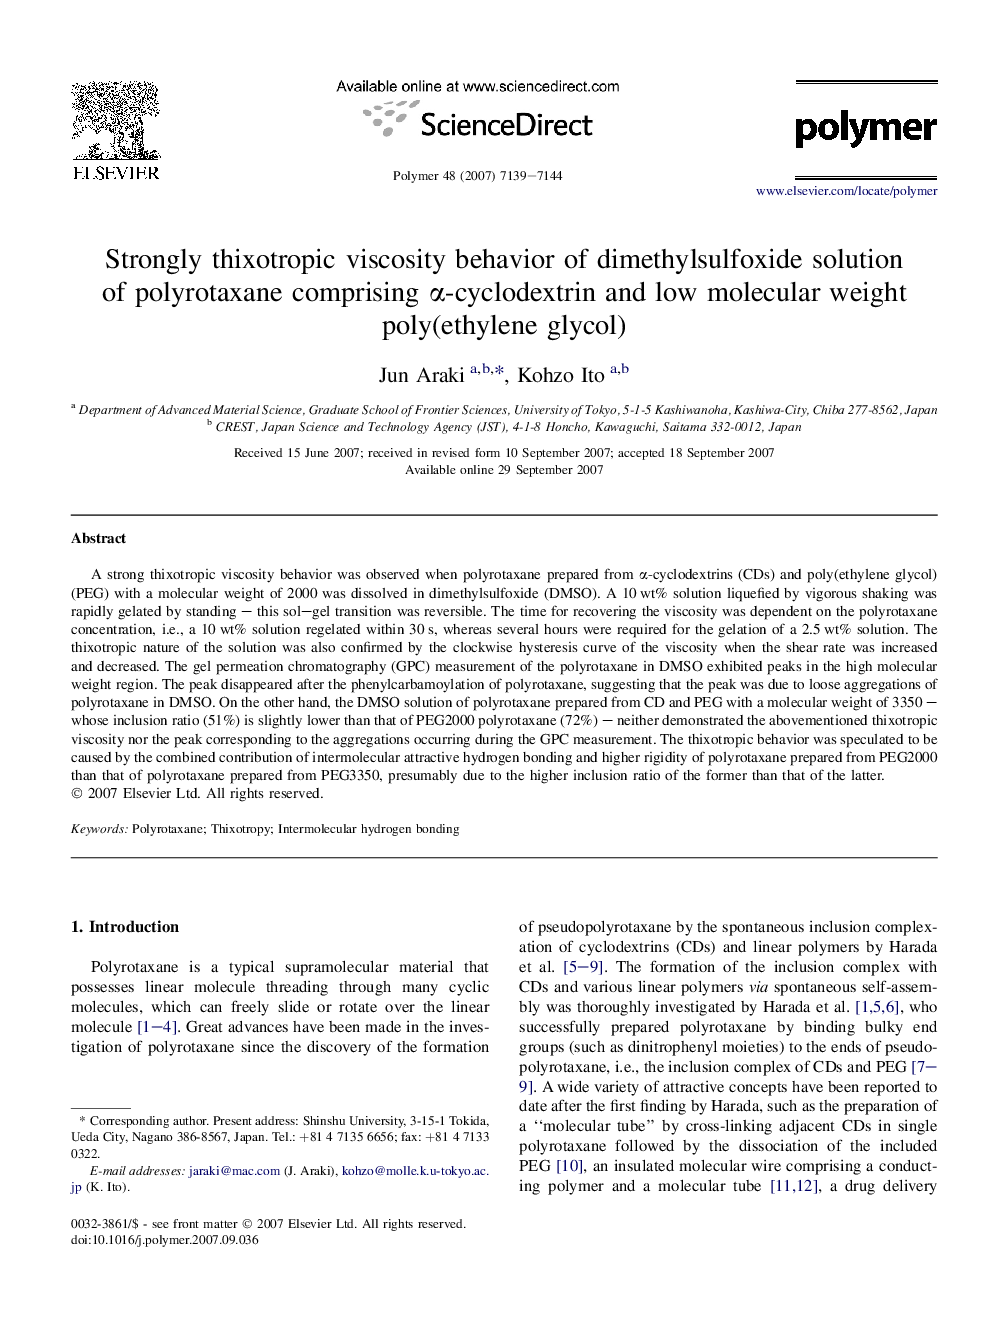 Strongly thixotropic viscosity behavior of dimethylsulfoxide solution of polyrotaxane comprising Î±-cyclodextrin and low molecular weight poly(ethylene glycol)